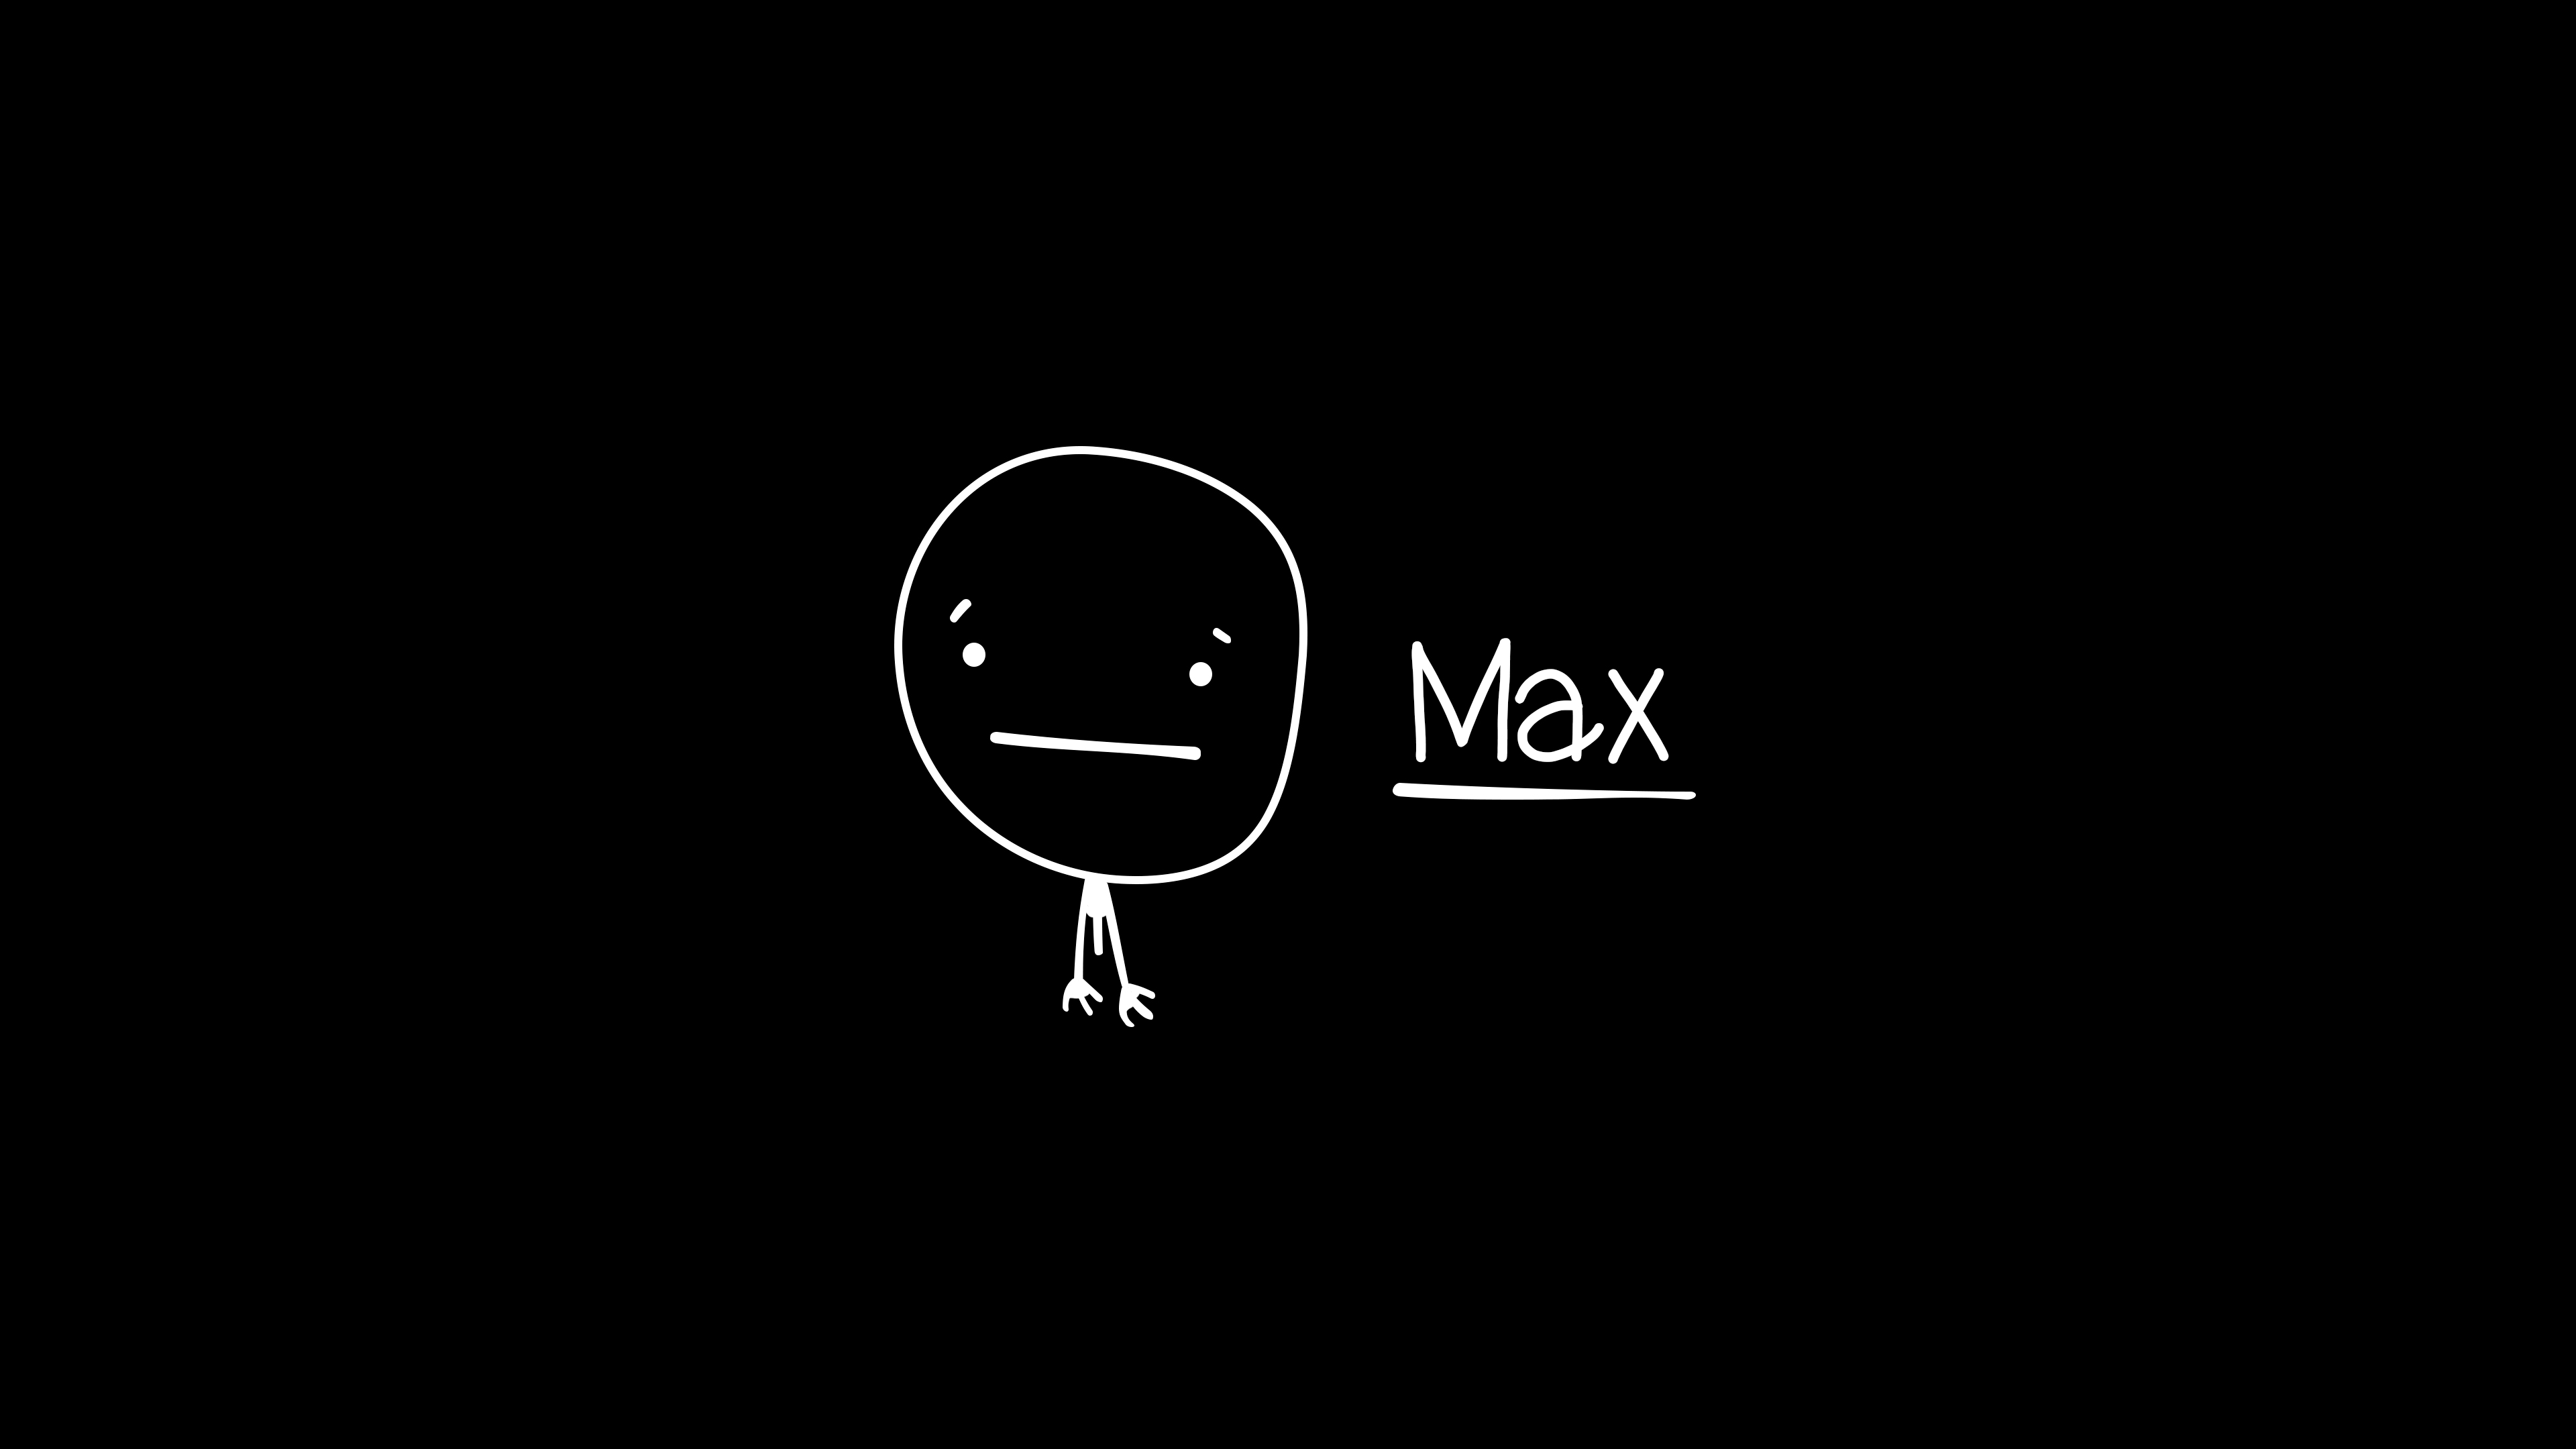 Room 219 - Max Caulfield - Life Is Strange (Black) by DanielePrechlak